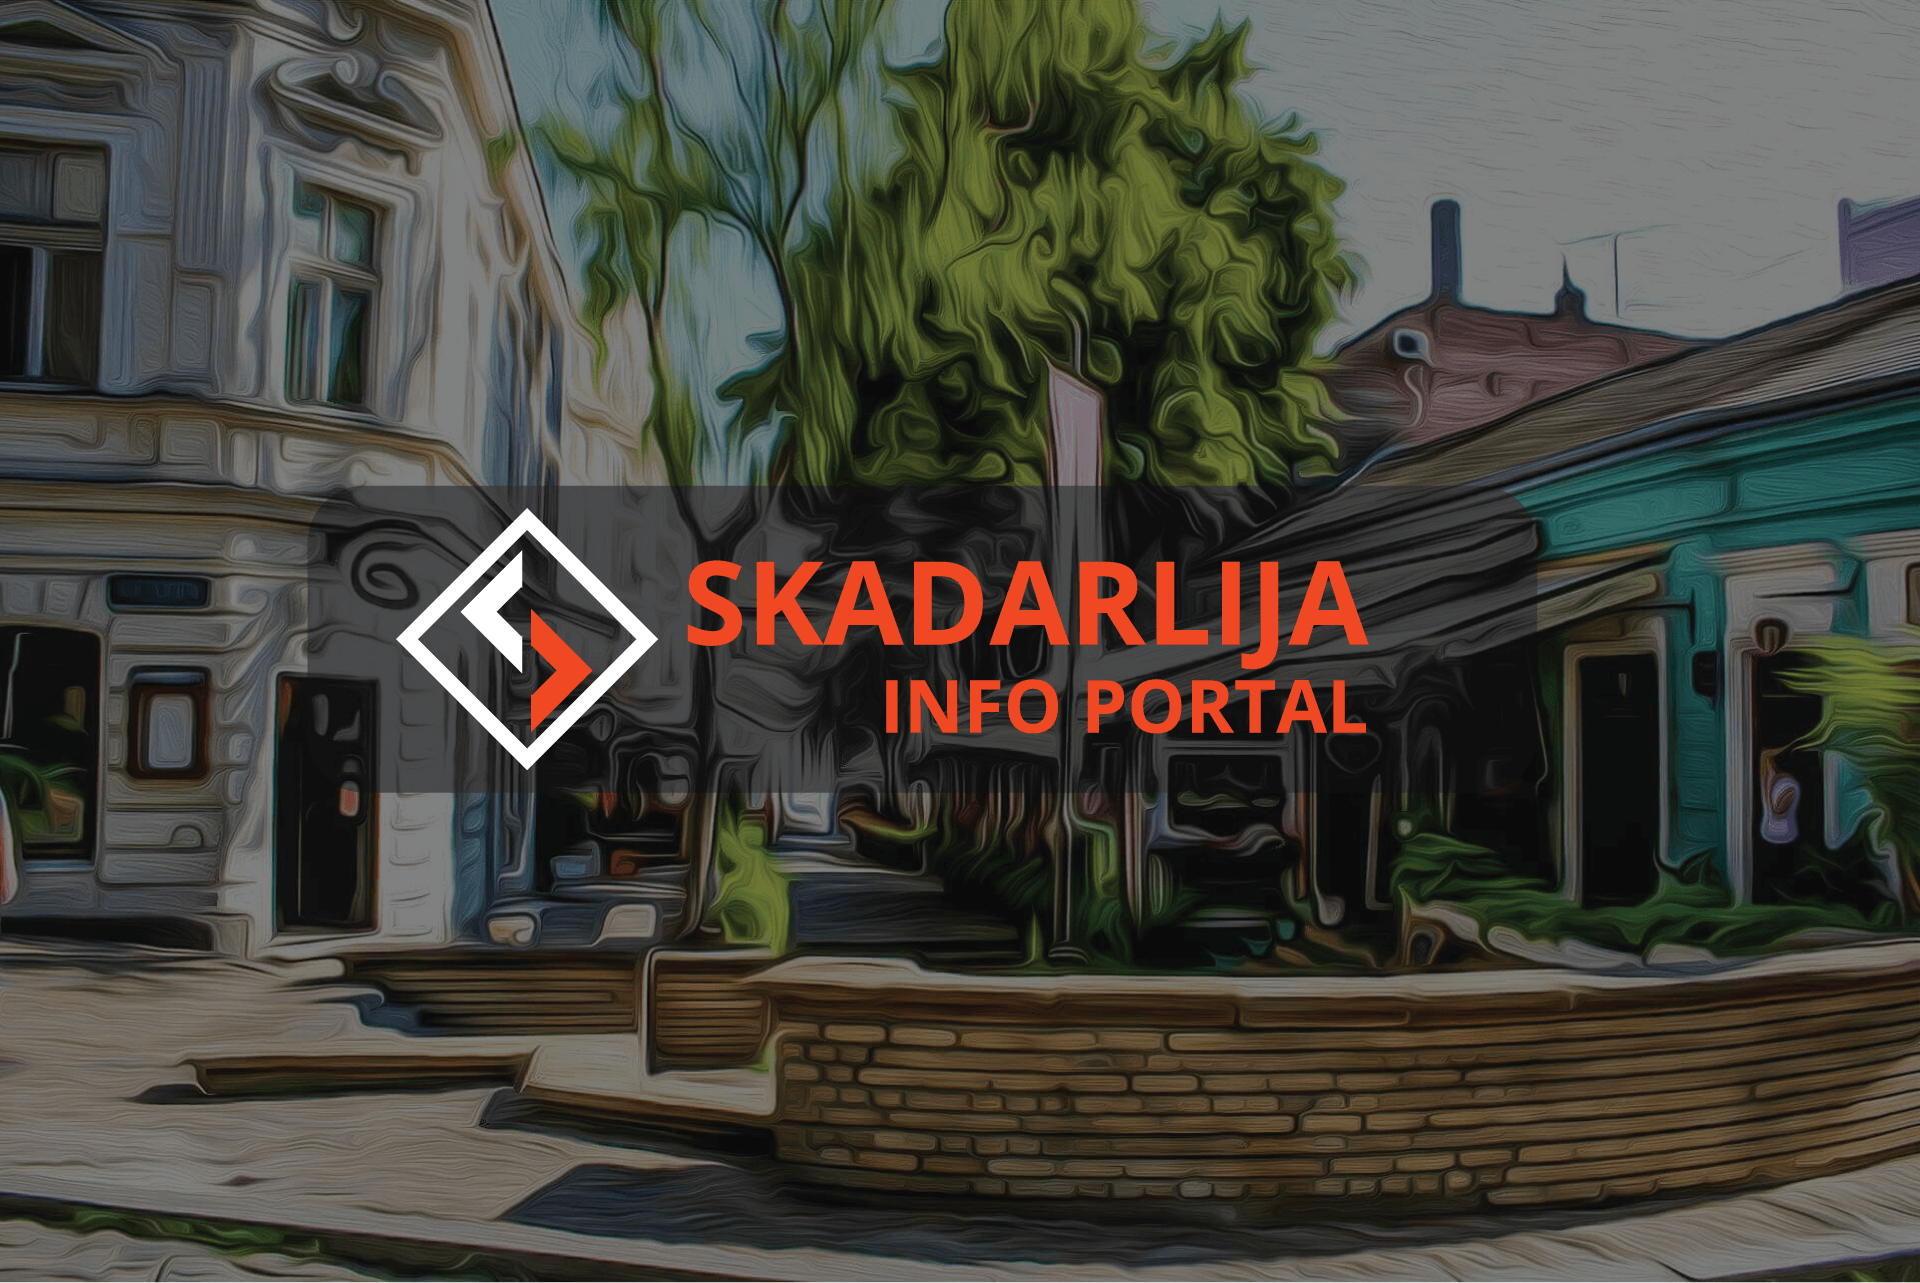 History of Skadarlija